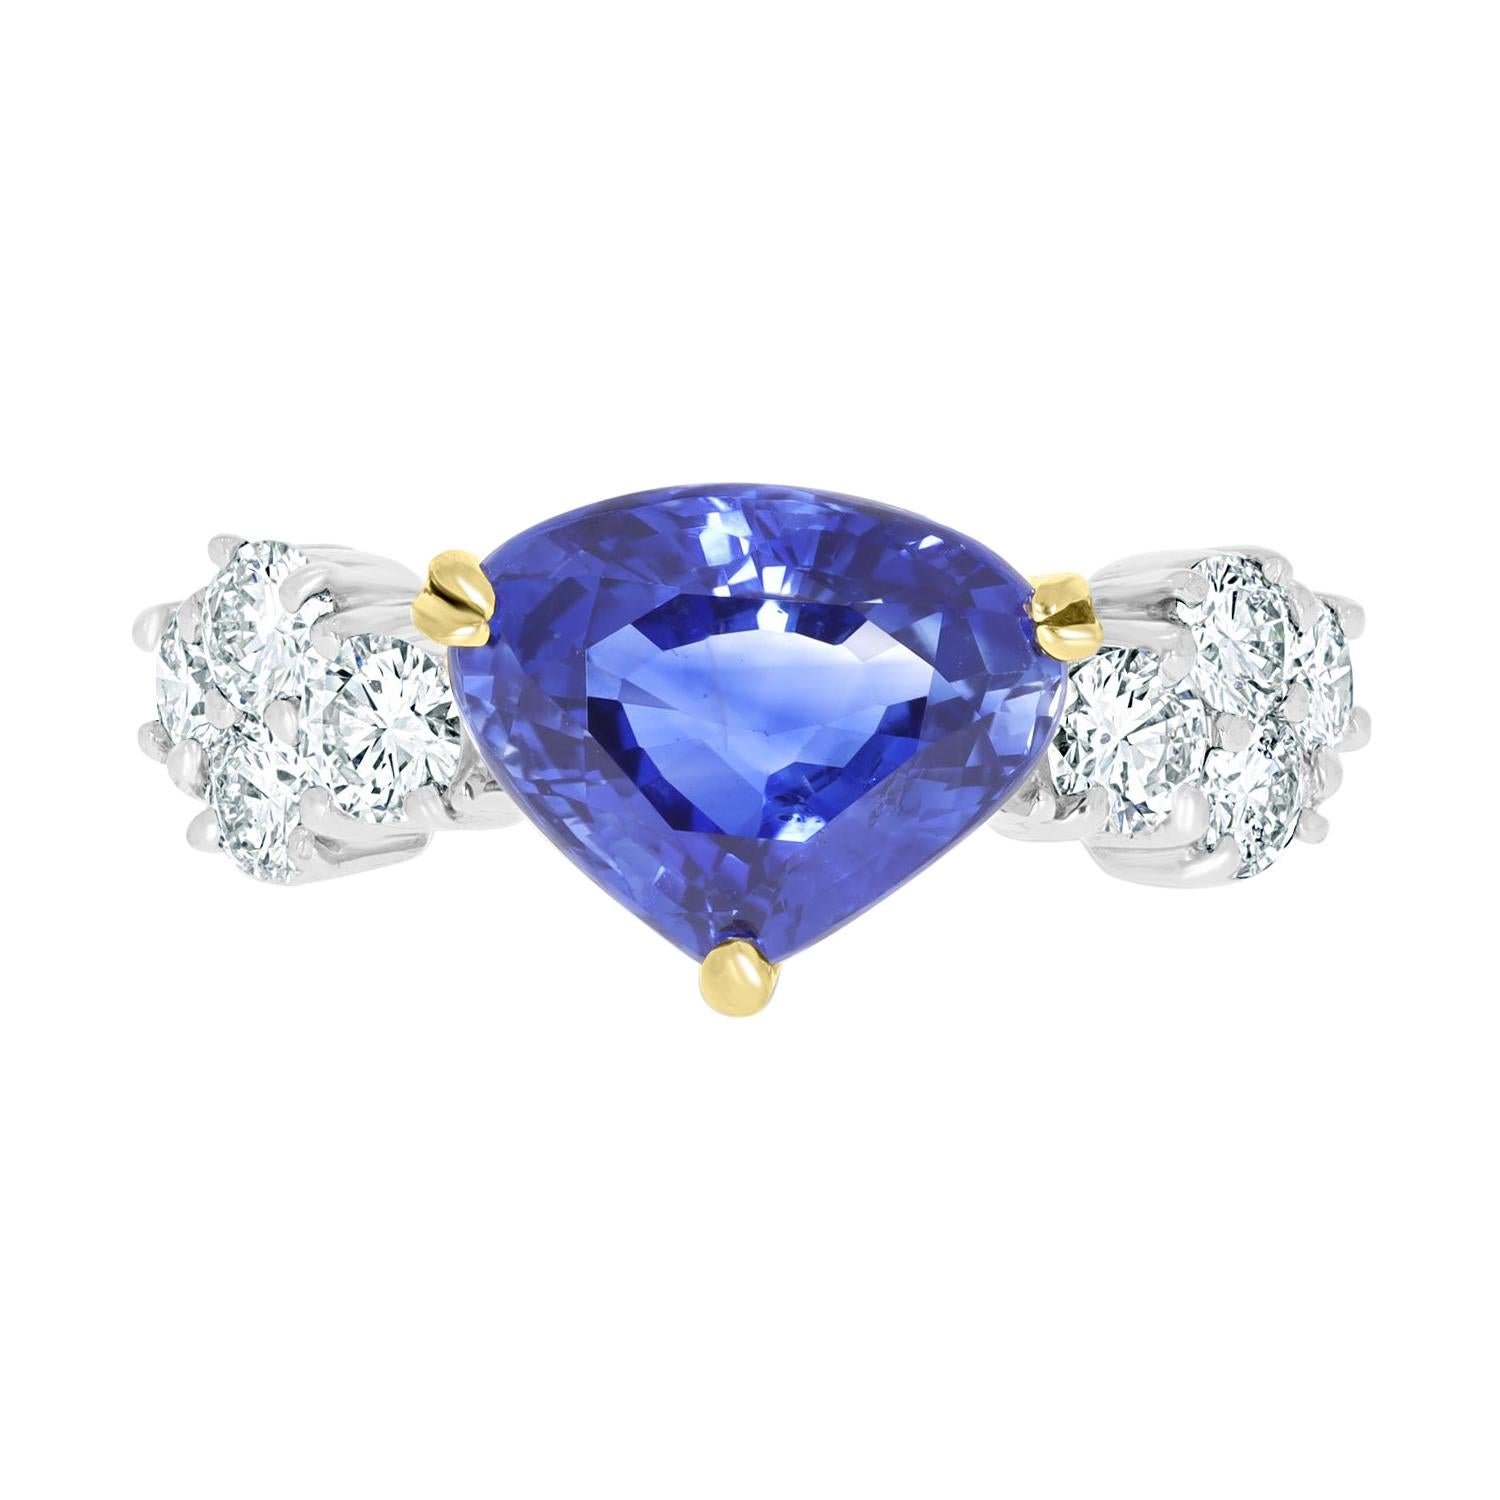 4.07ct Sapphire Ring with 0.82ct Diamonds Set in Platinum/18k